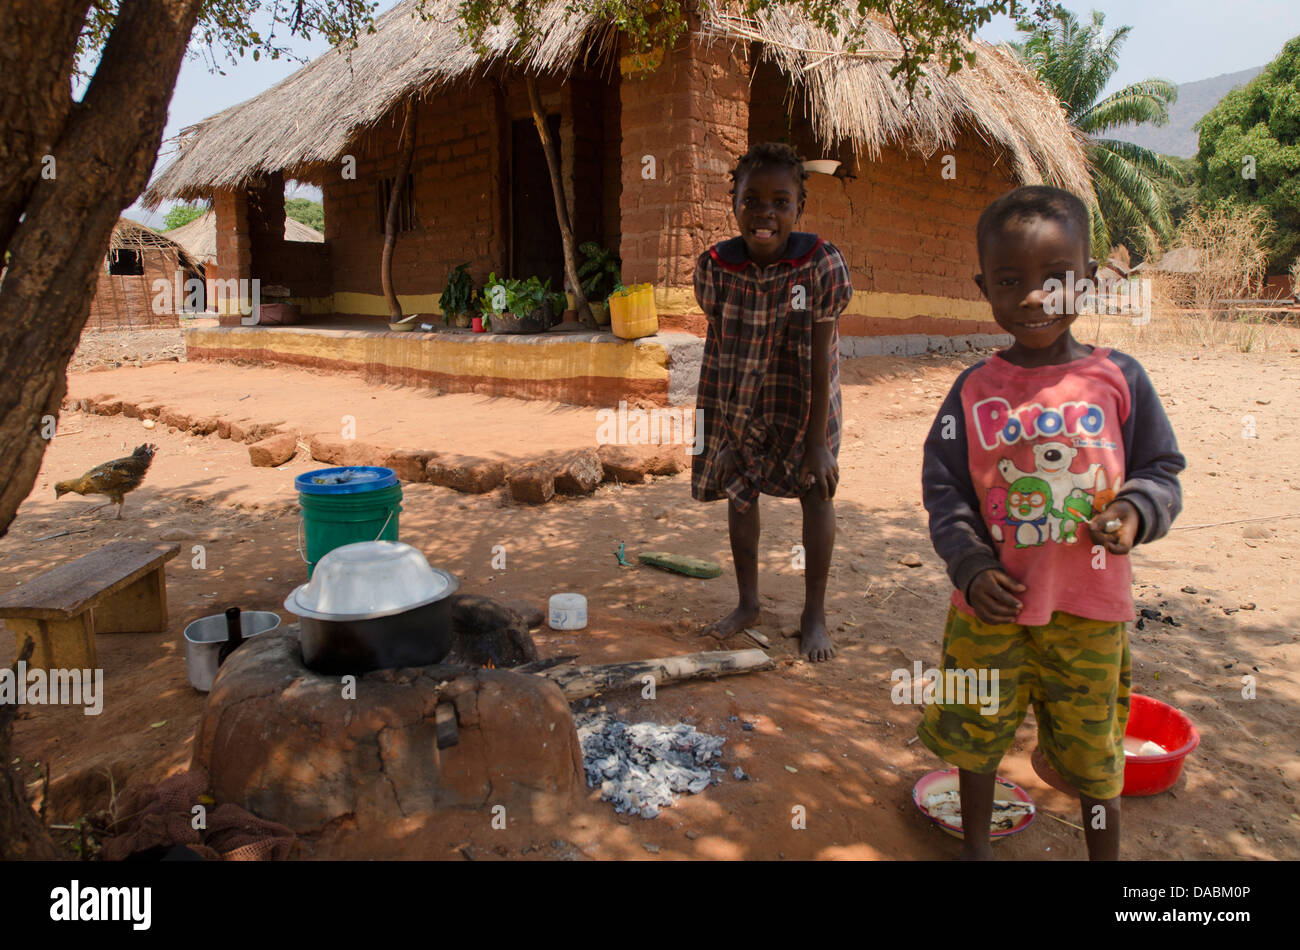 African children in village, Talpia, Zambia, Africa Stock Photo